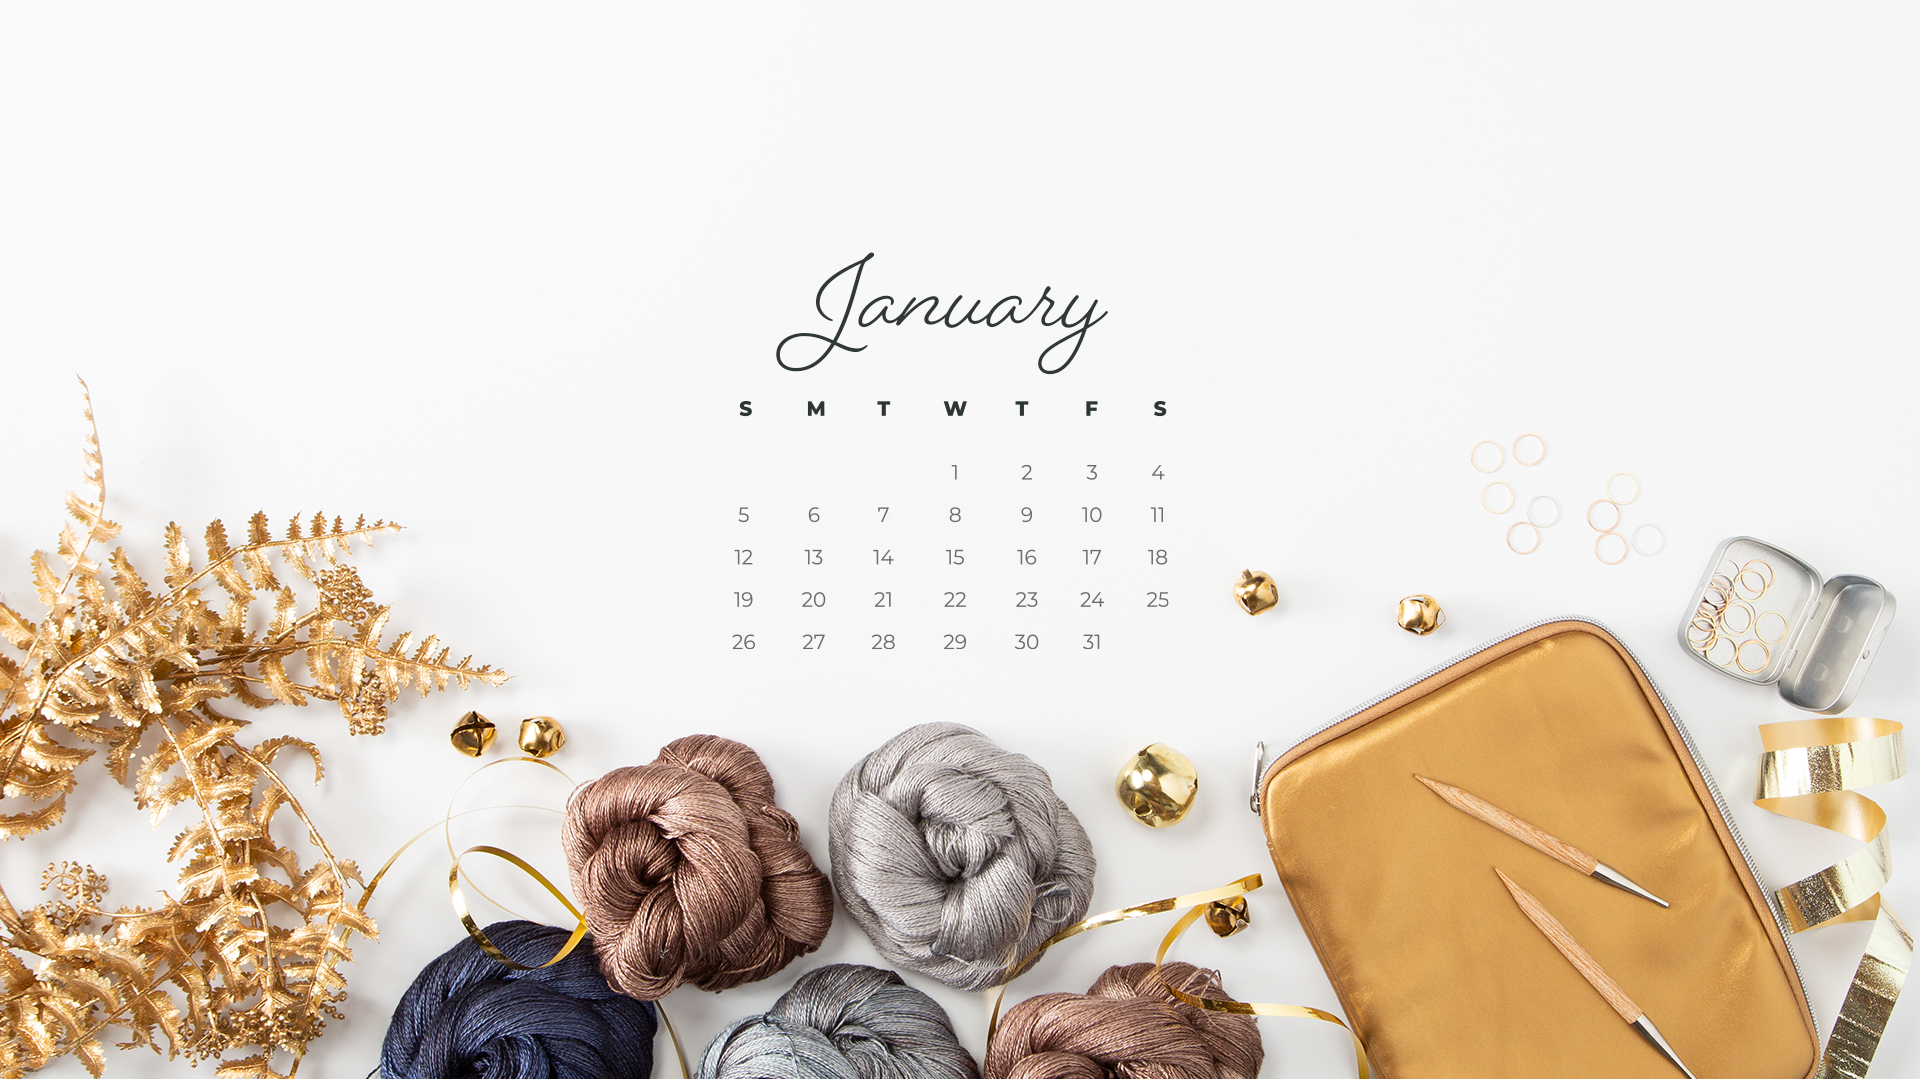 Free Downloadable January Calendar The Knit Picks Staff Knitting Blog